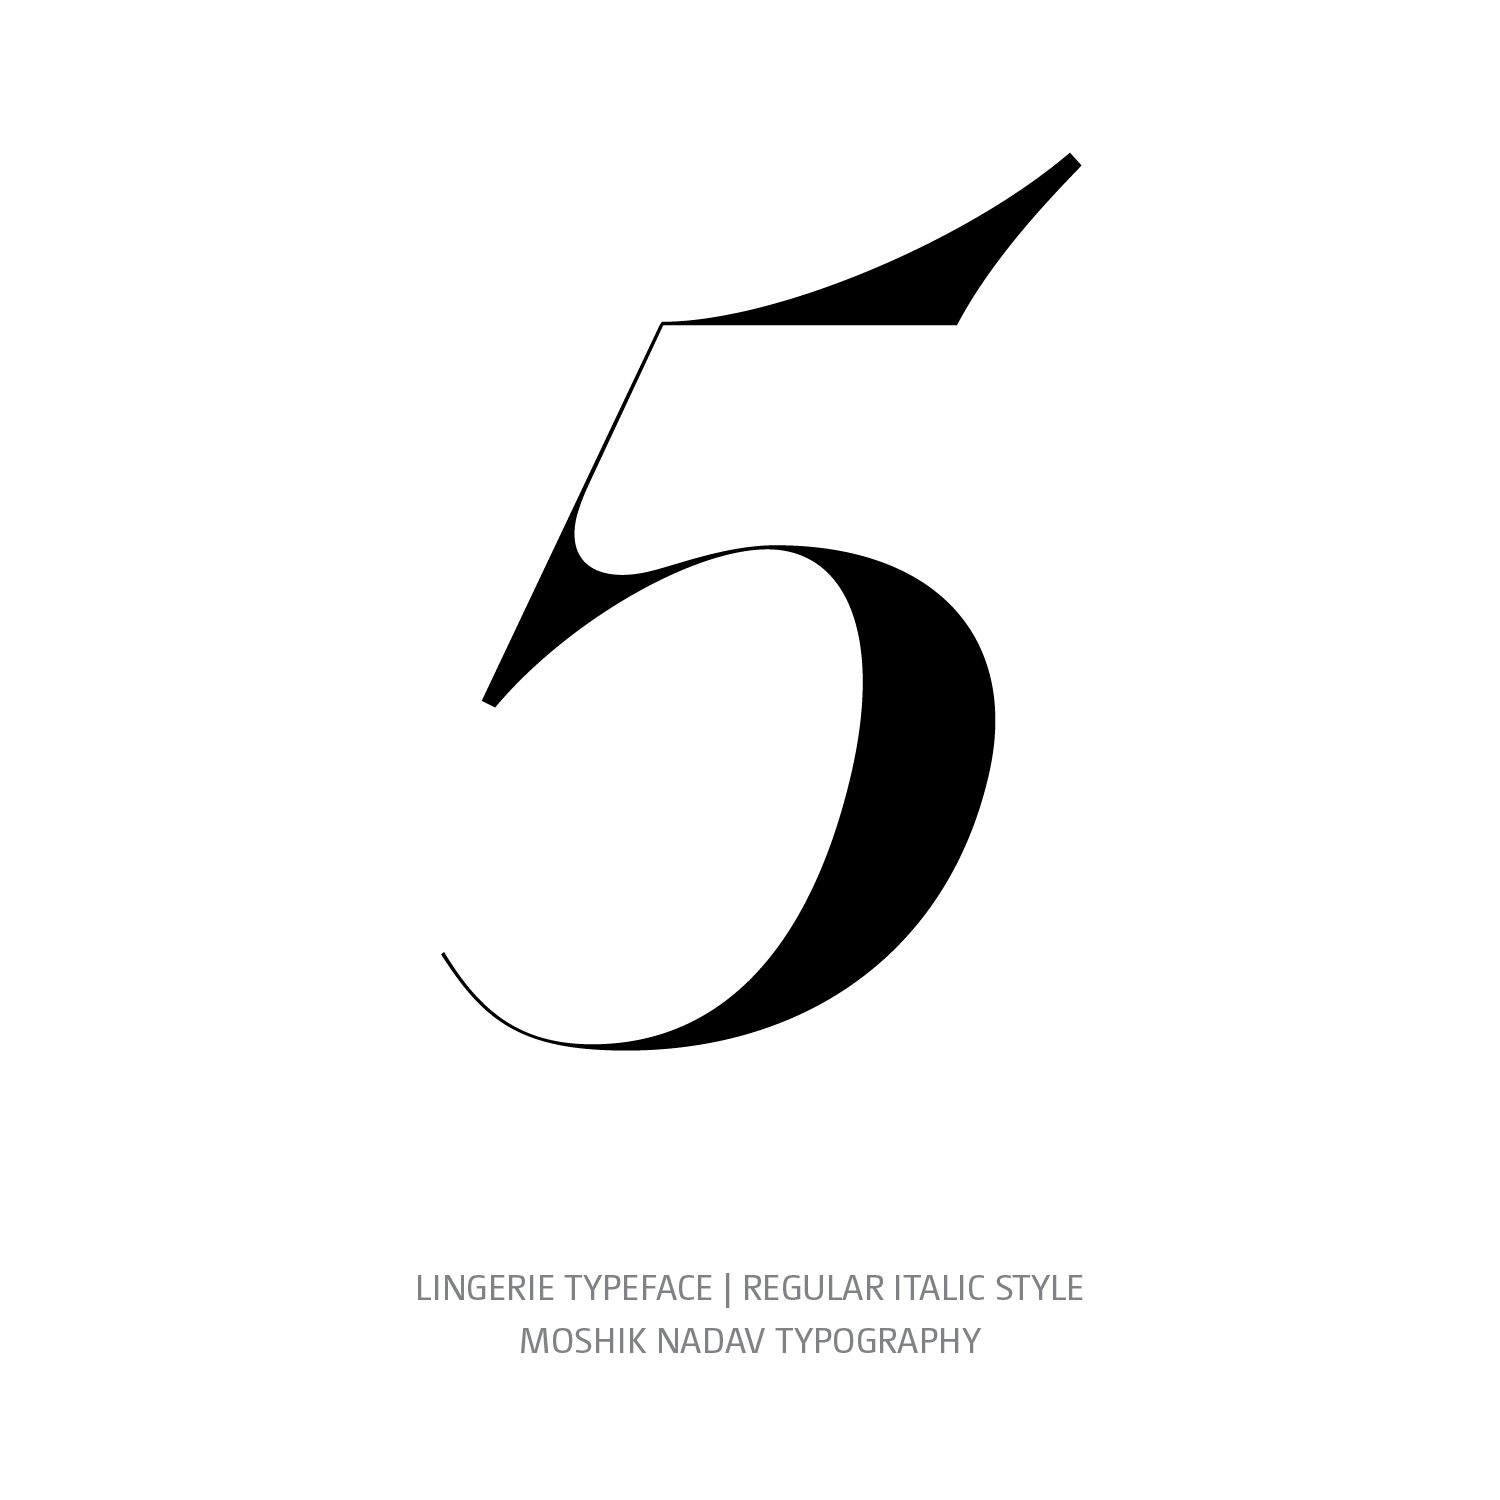 Lingerie Typeface Regular Italic 5 - Fashion fonts by Moshik Nadav Typography